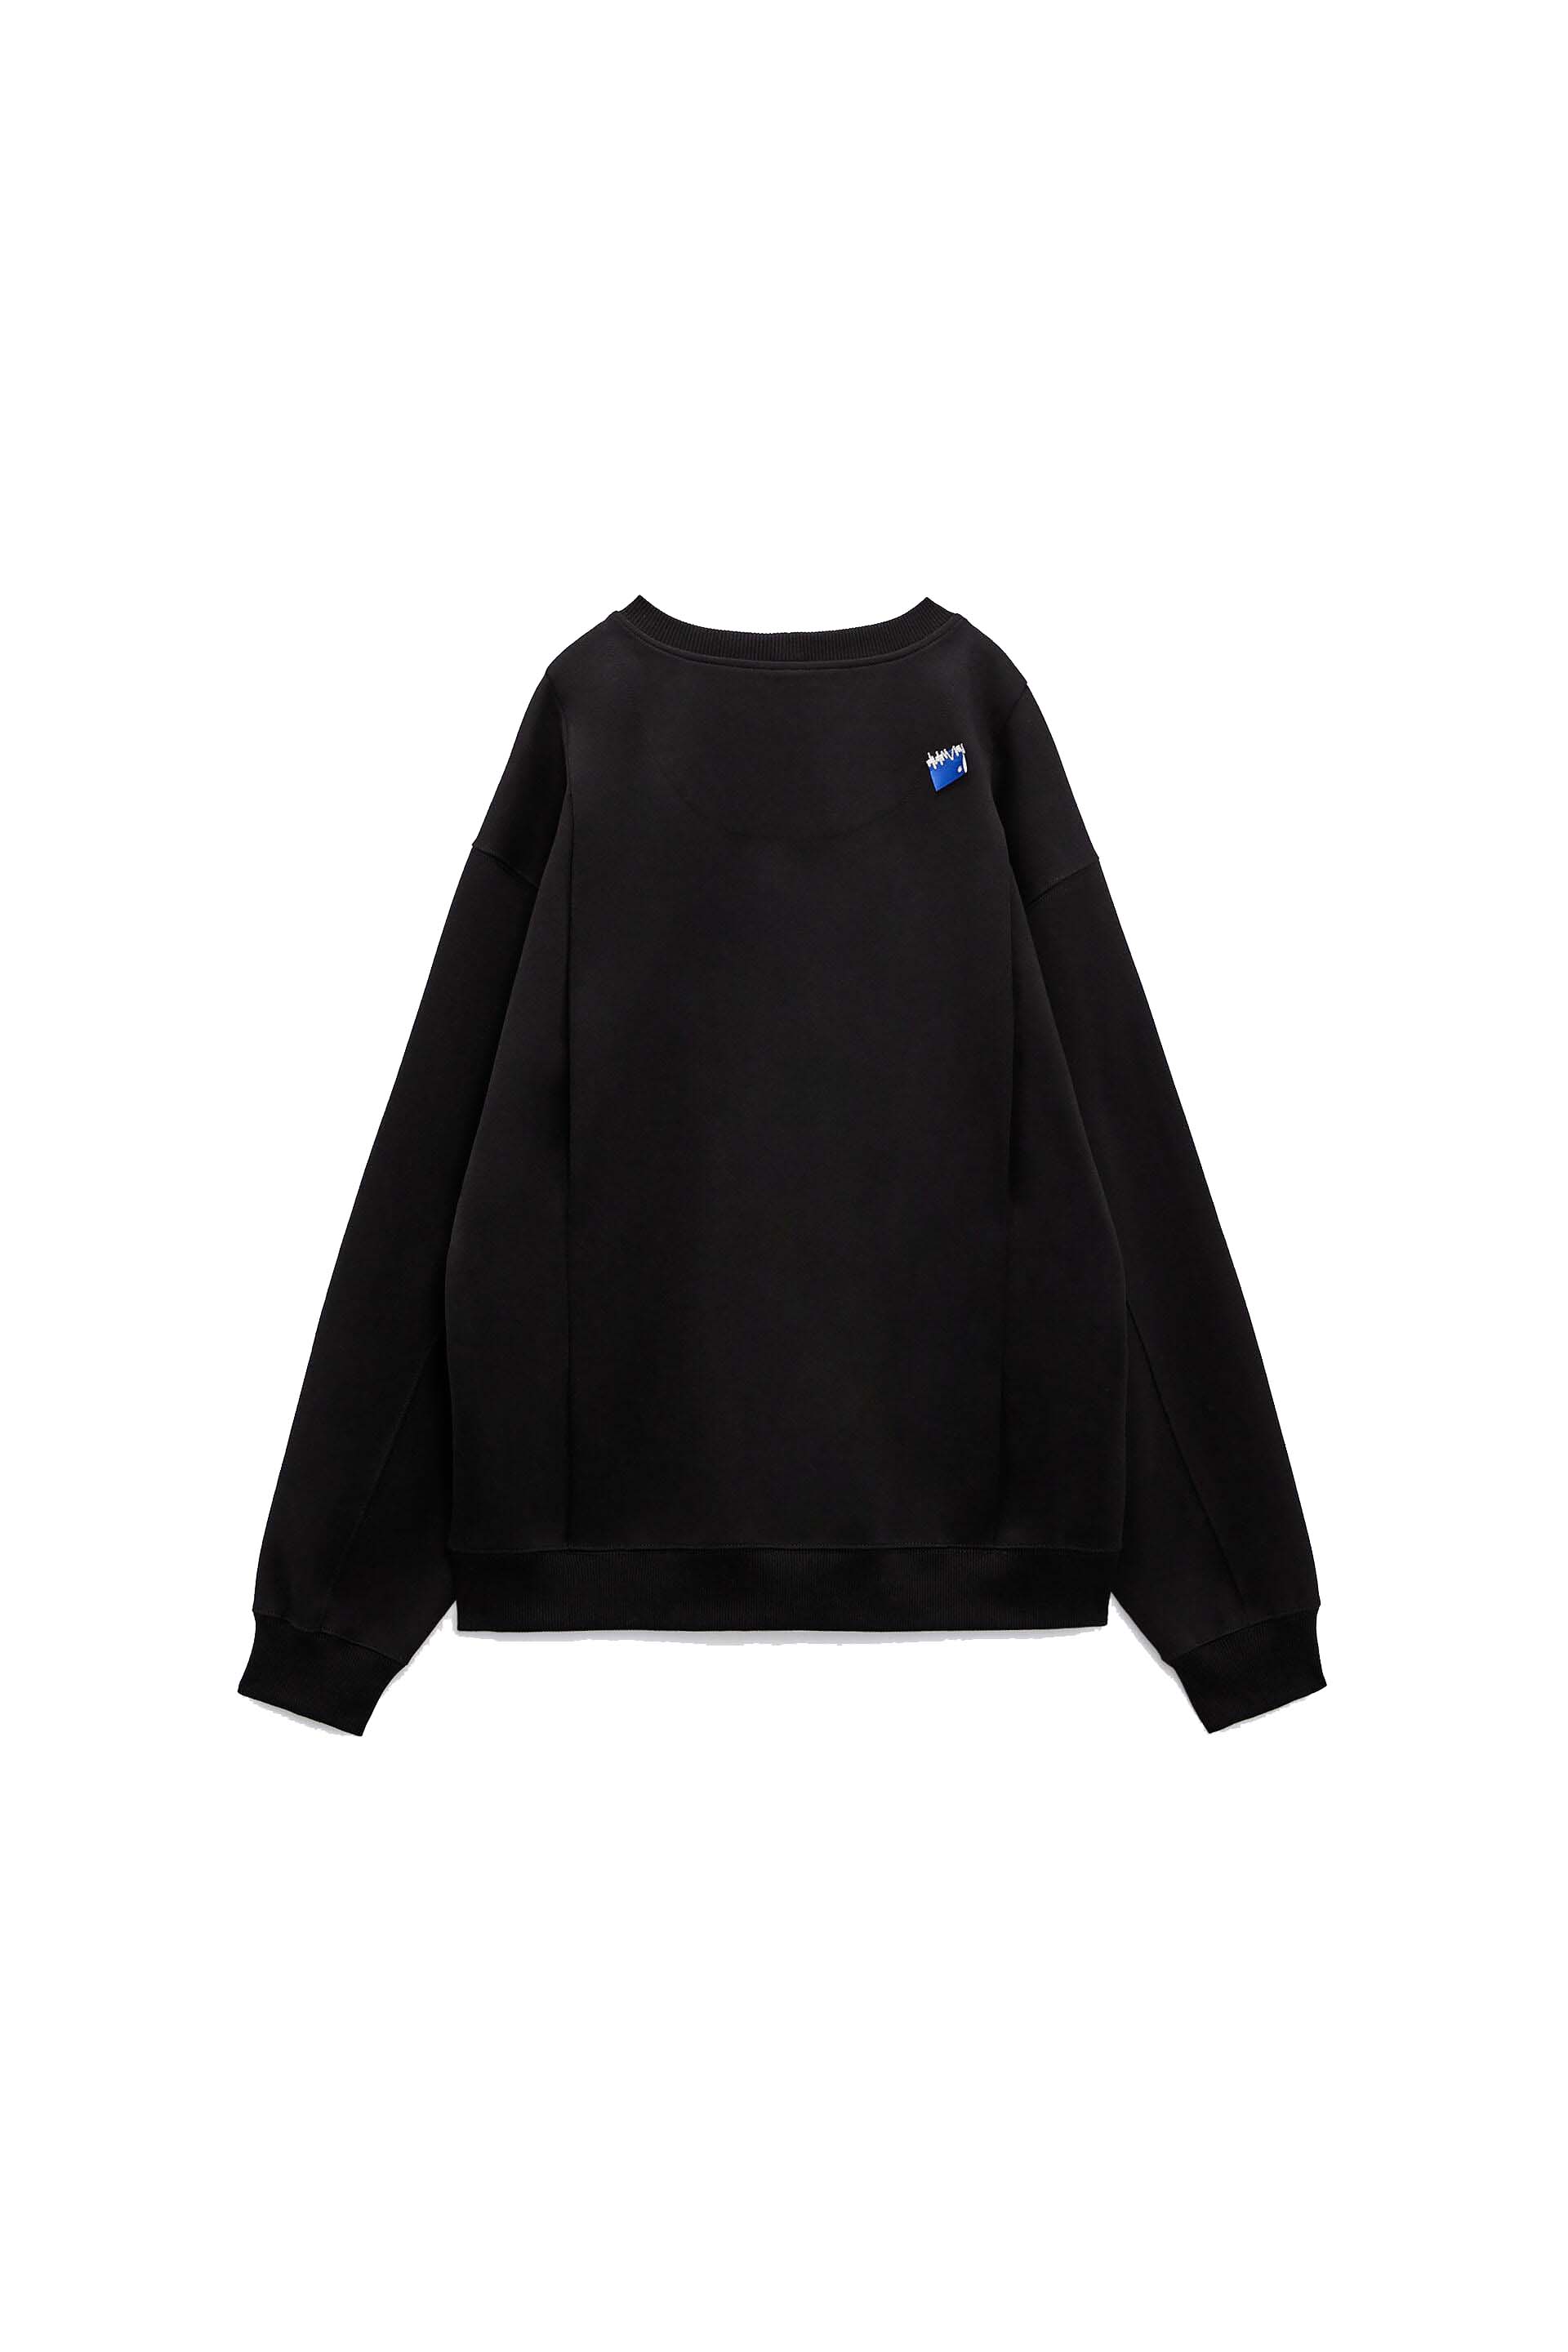 ADER error x Zara Oversized Sweatshirt Black